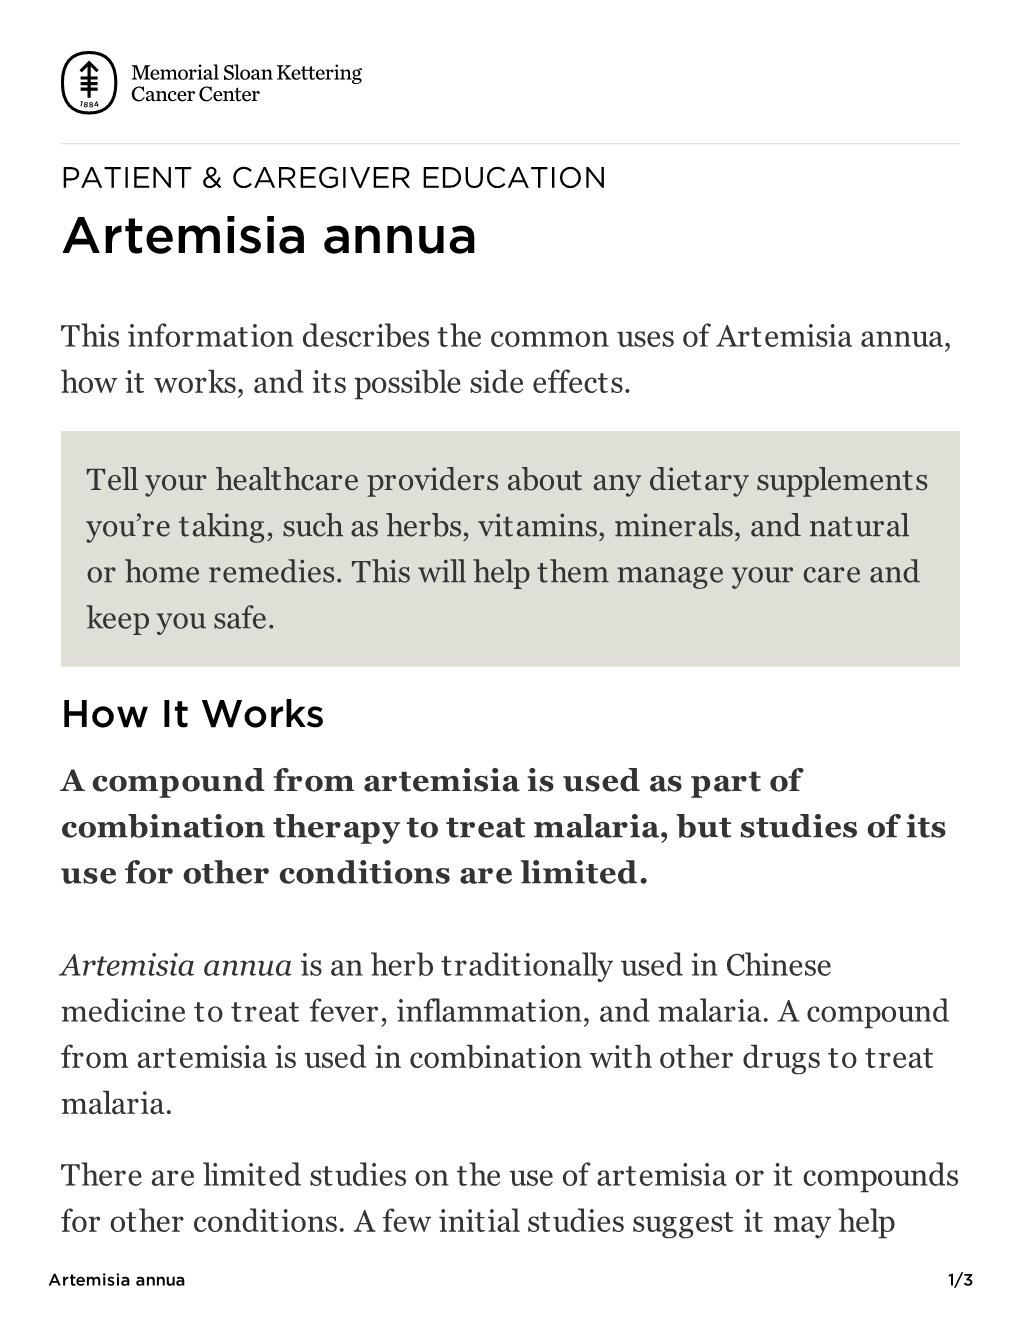 Artemisia Annua | Memorial Sloan Kettering Cancer Center